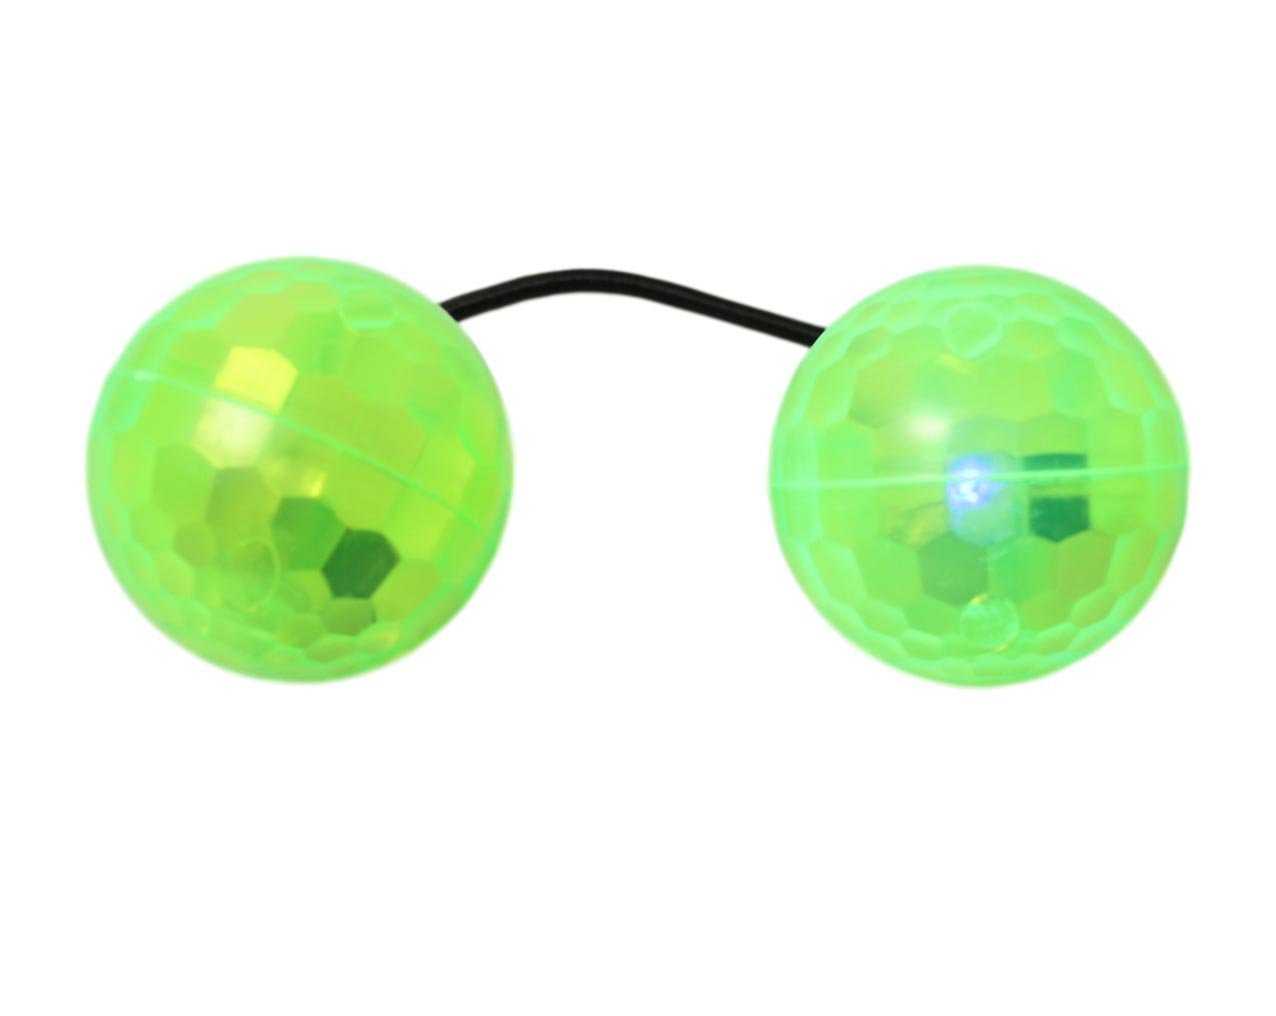 Begleri Ball Fidget Yoyo Bundle Control Chucks Game Knuckles Anti Stress 2 Colours 8884 (Parcel Rate)